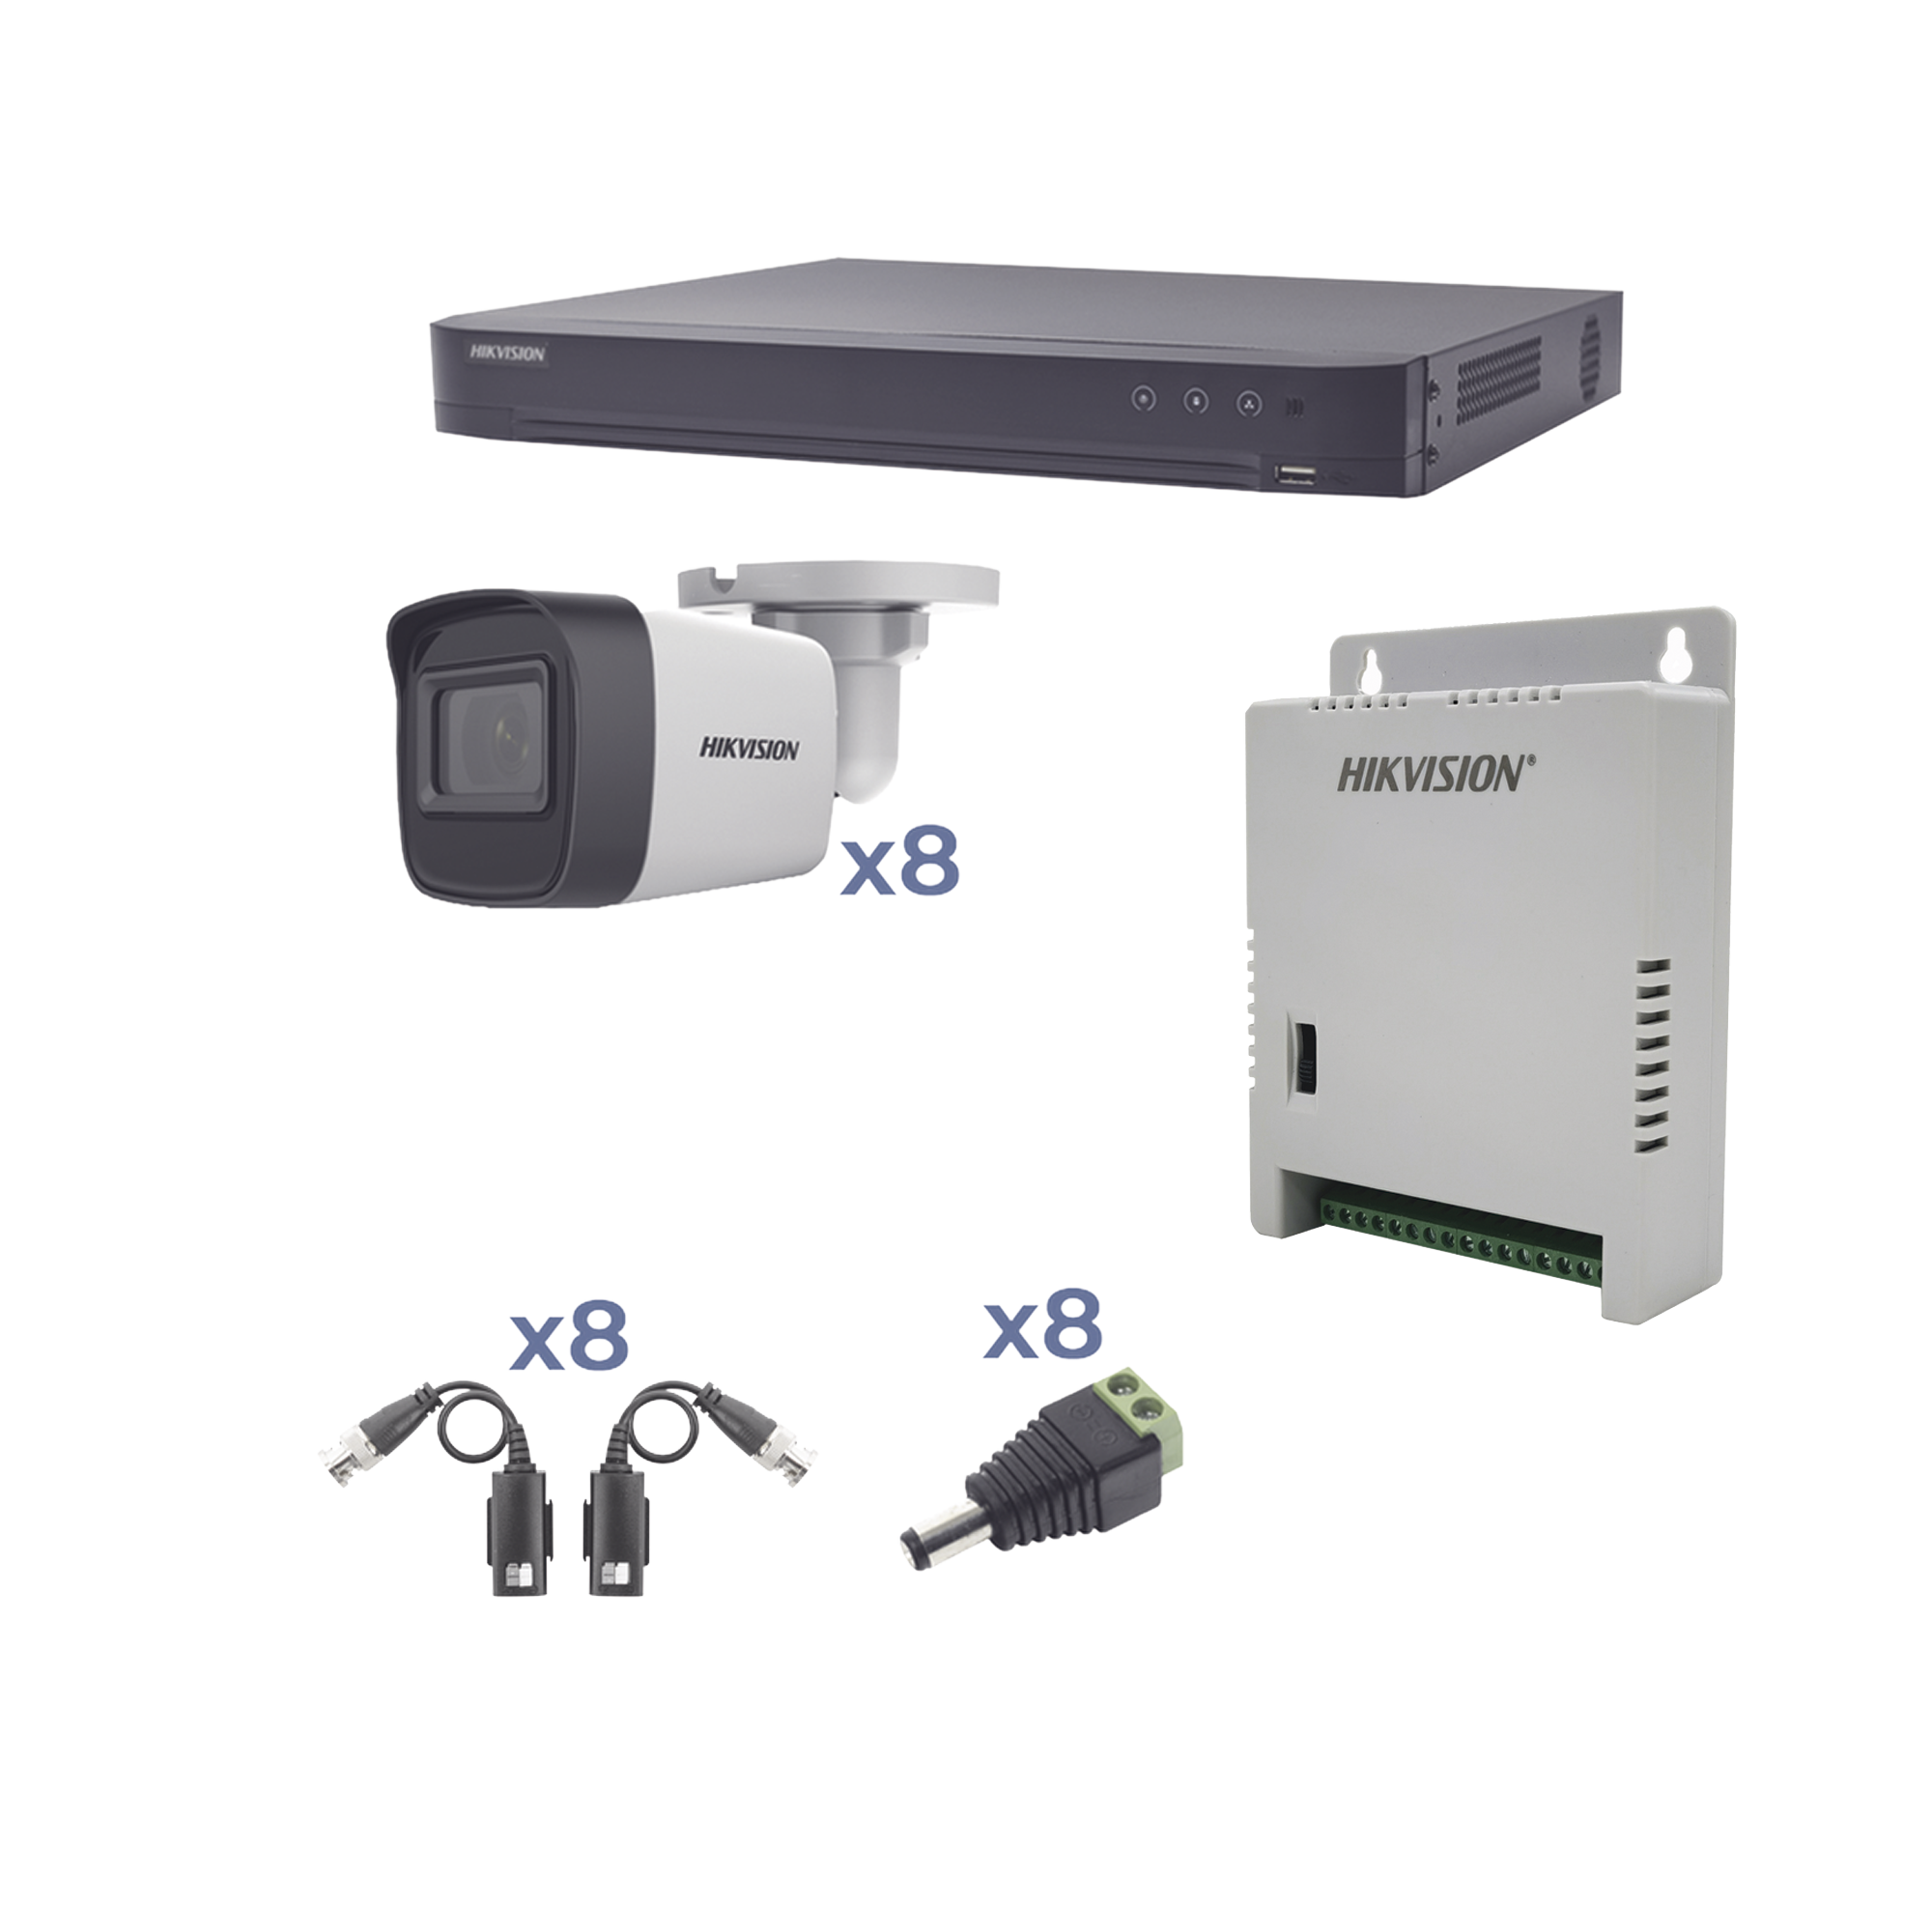 KIT TurboHD 1080p / DVR 8 Canales / 8 Cámaras Bala (exterior 2.8 mm) / Transceptores / Conectores / Fuente de Poder Profesional hasta 15 Vcc para Larga Distancia